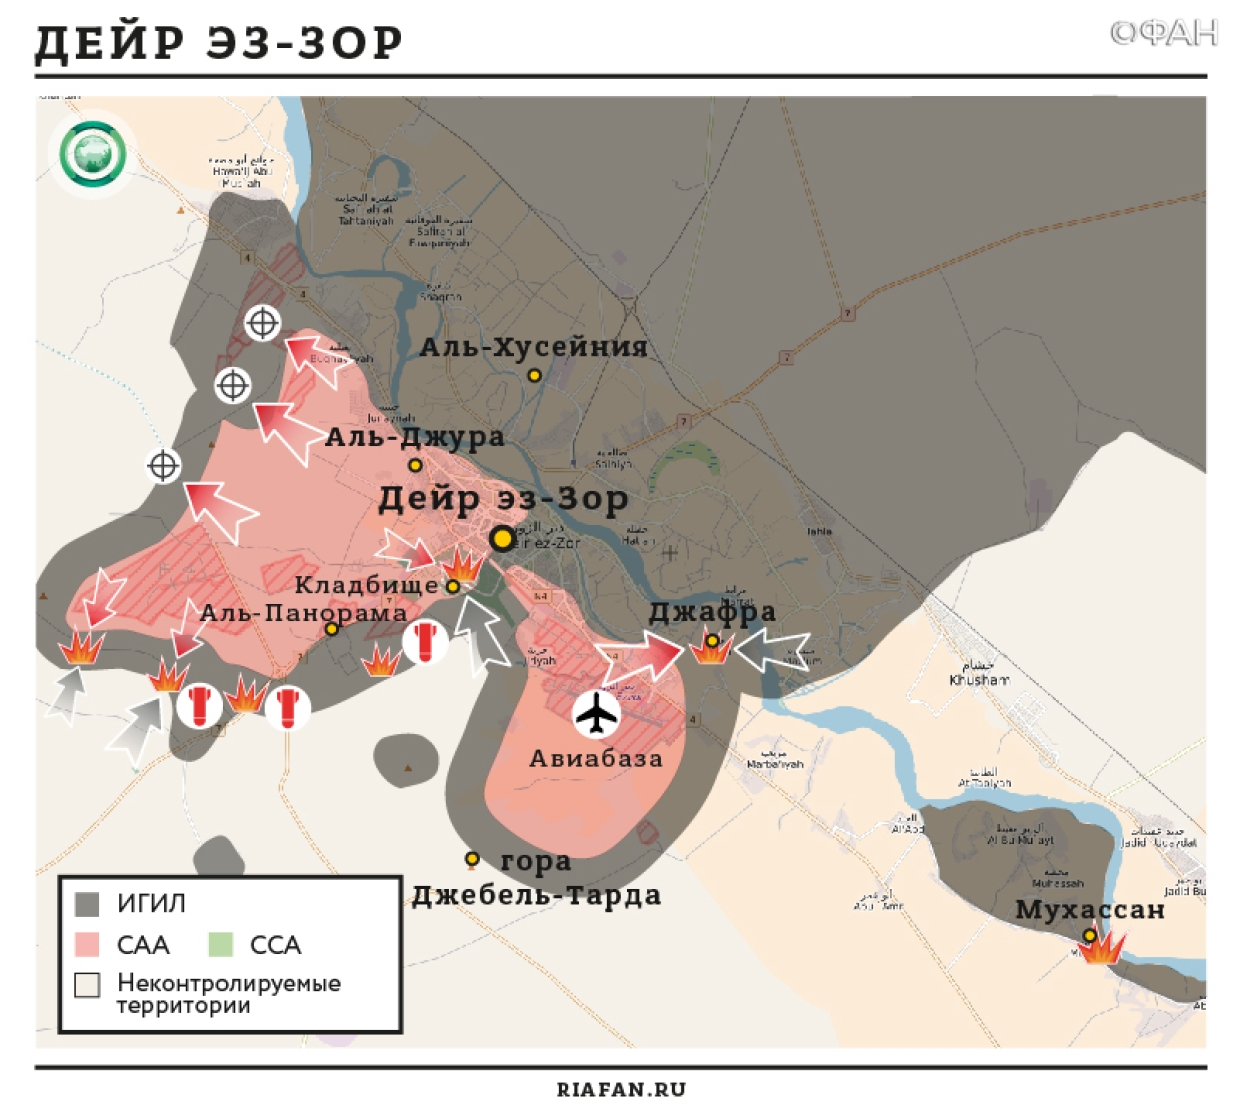 Иг на карте. Дейр-эз-зор на карте. Дейр-эз-зор на карте Сирии. Провинция Дейр-эз-зор на карте Сирии. ИГИЛ карта.